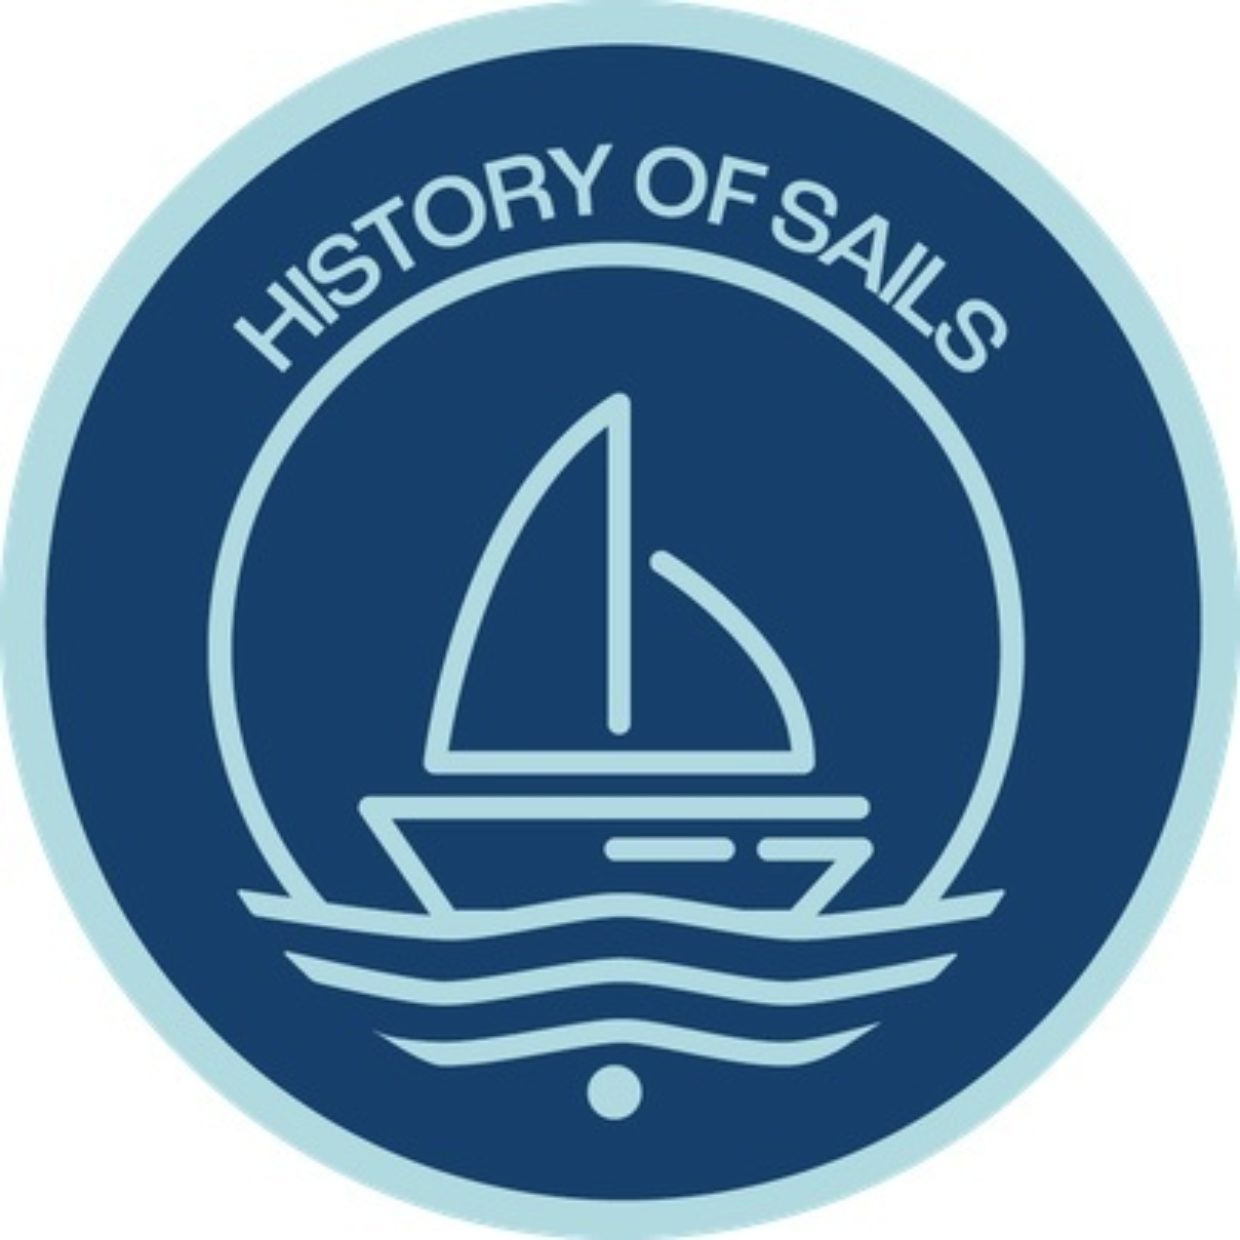 History of Sails UB logo